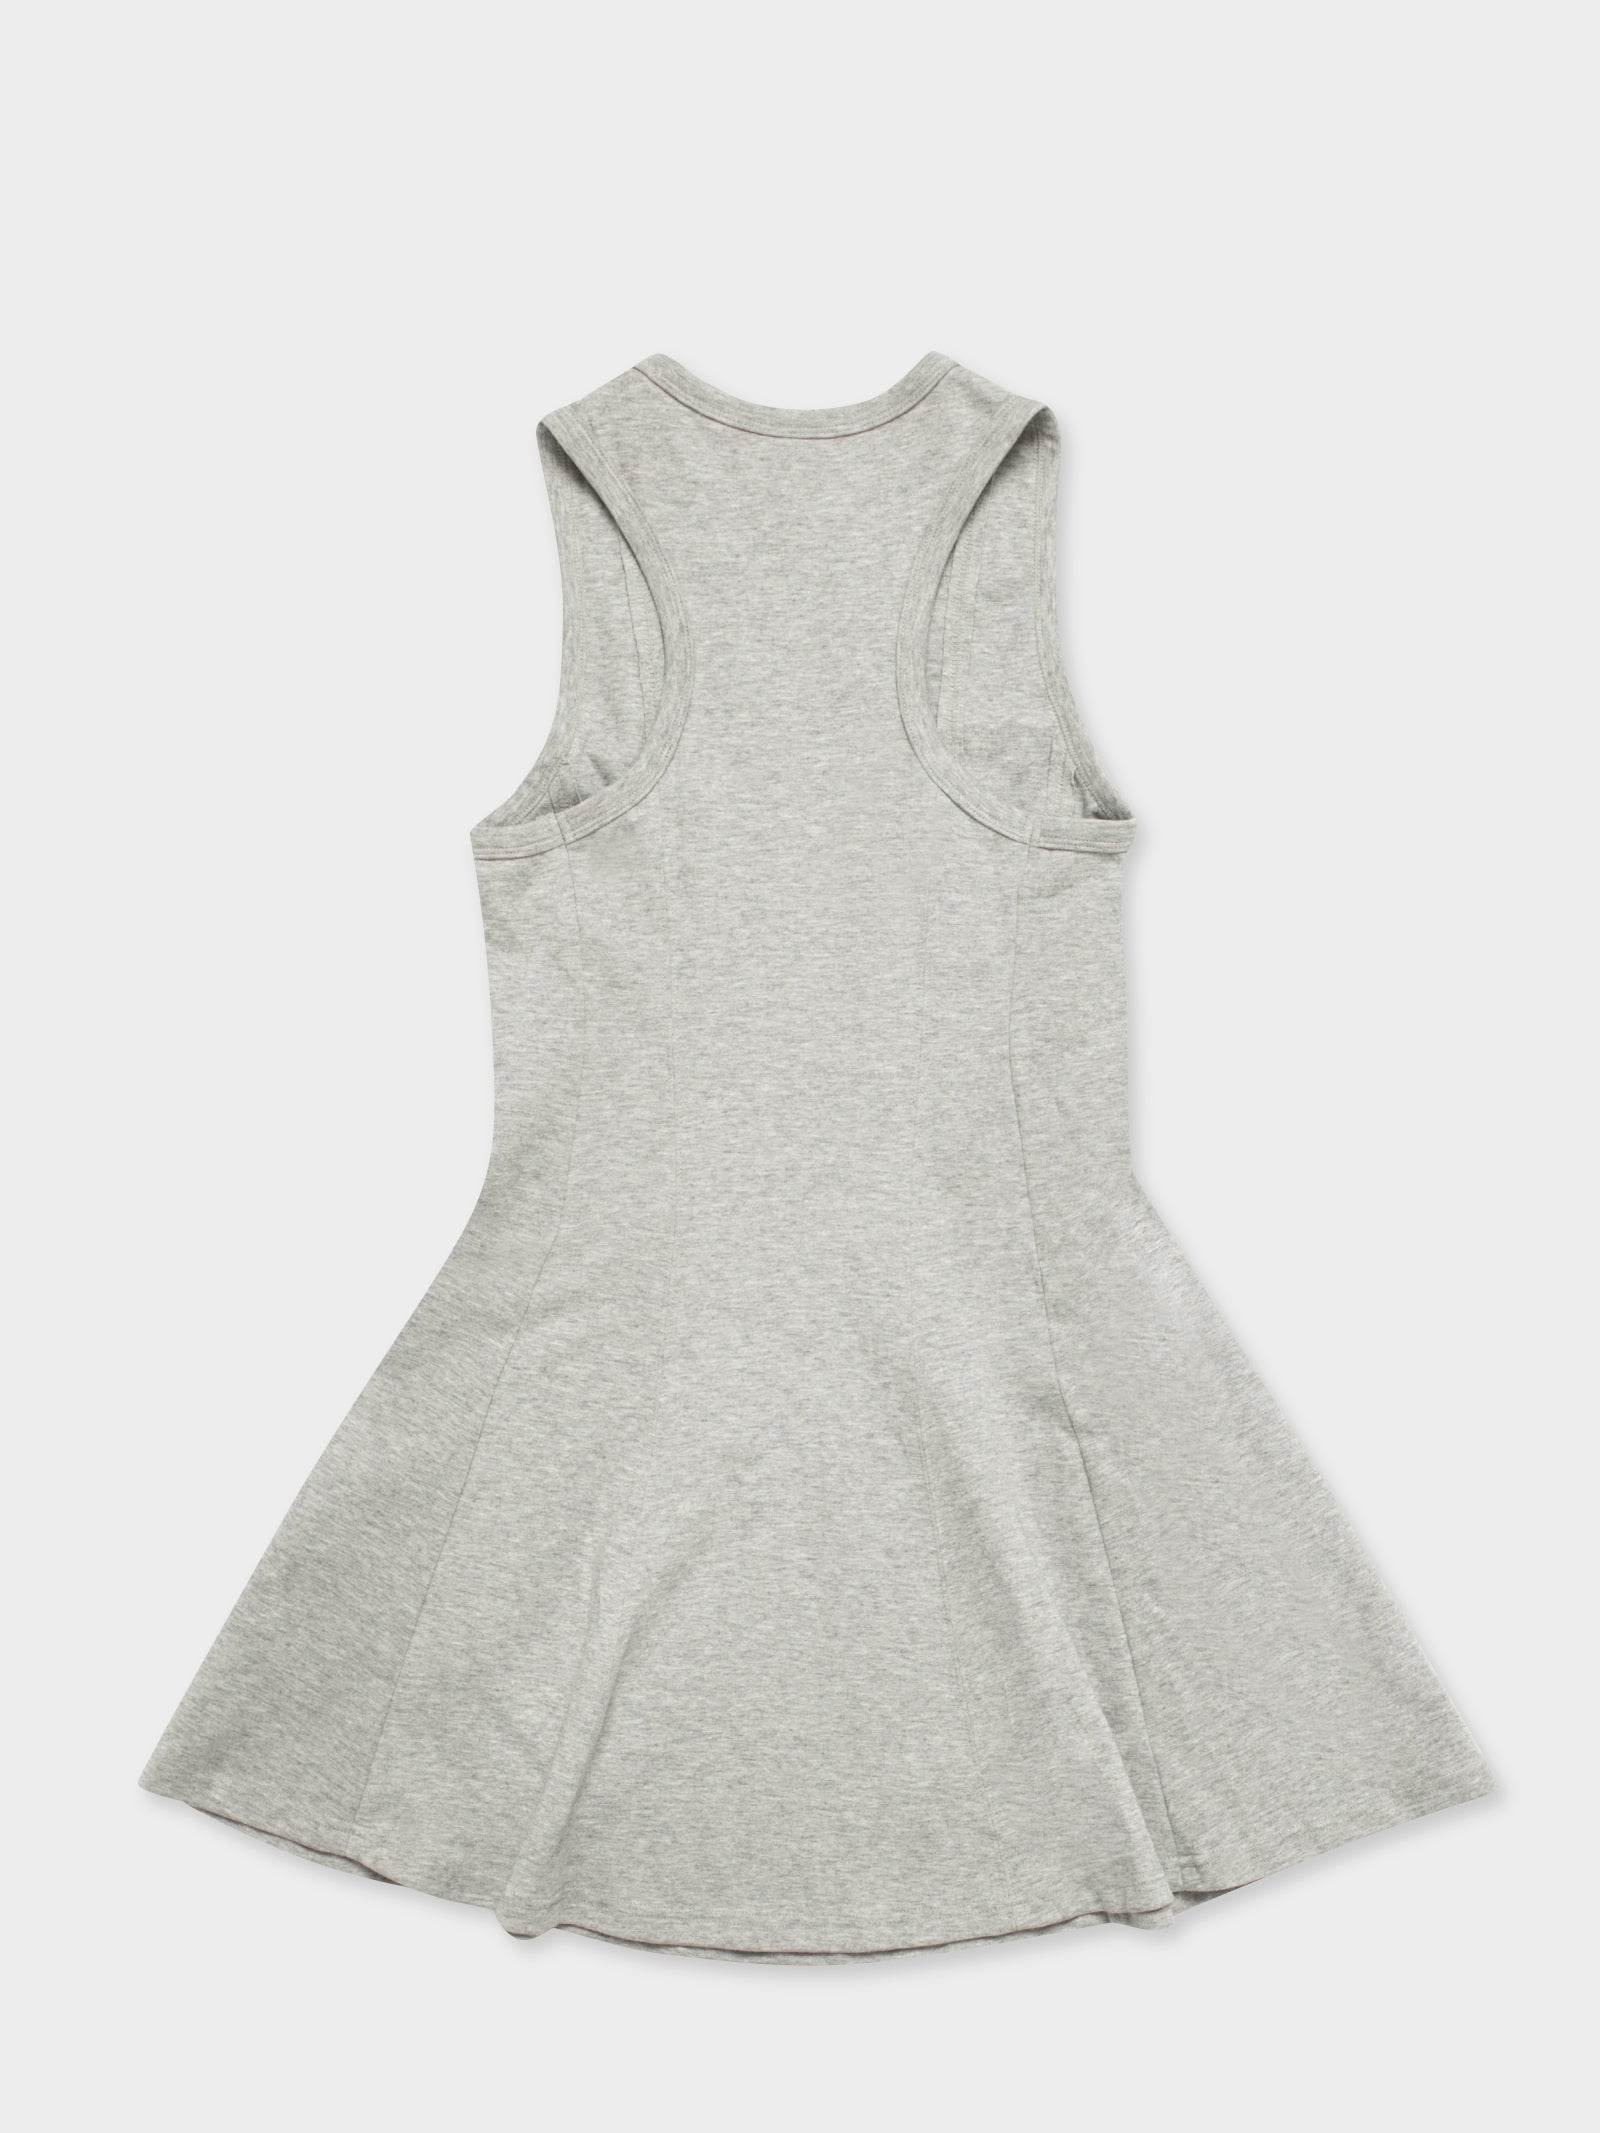 Zoie Dress in Grey Marle